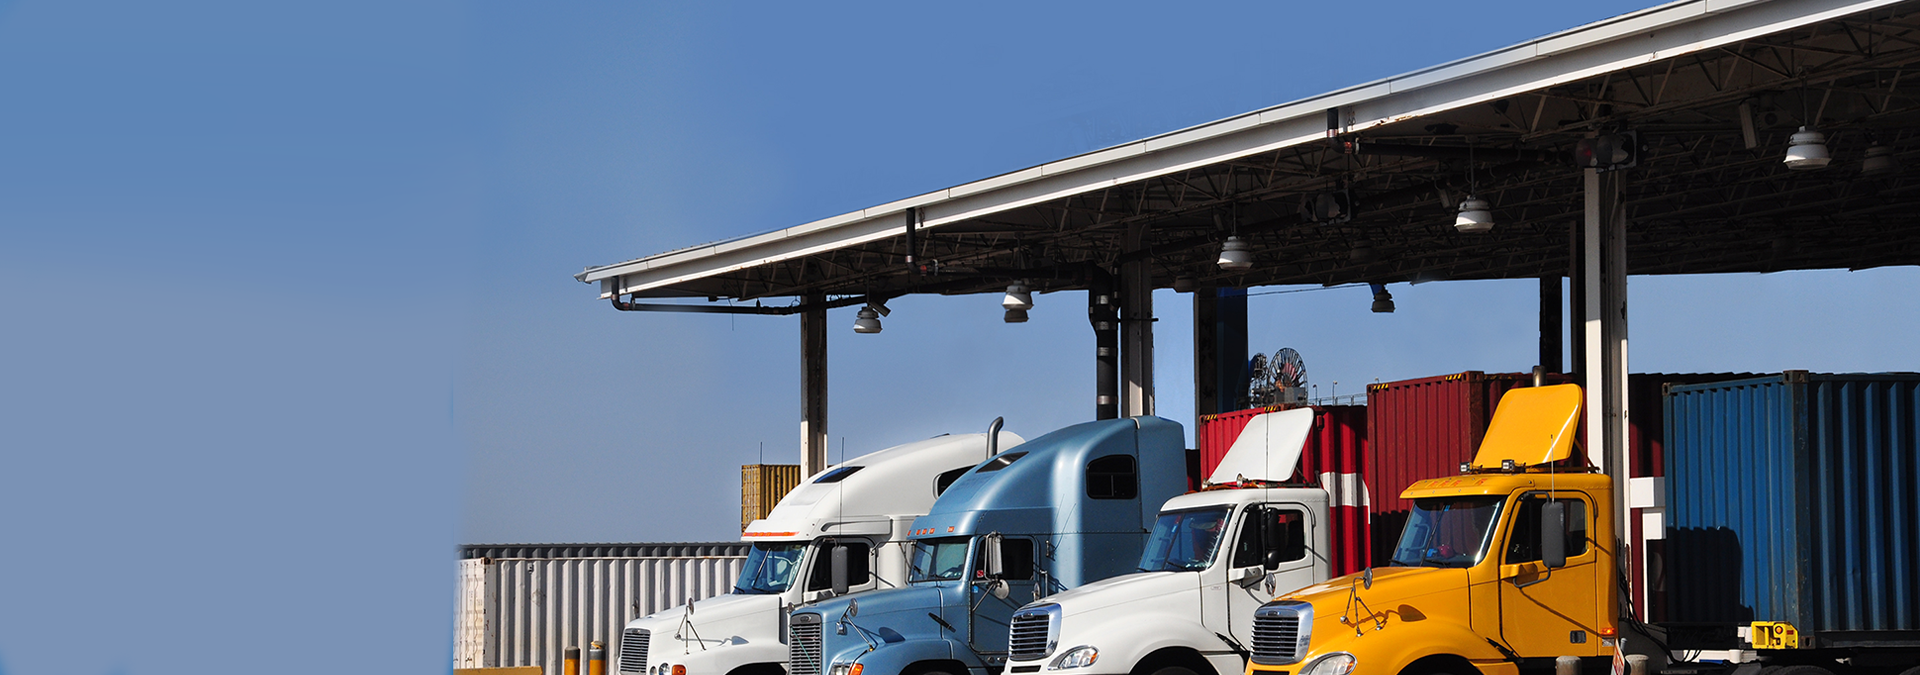 Trucks at Conley terminal gate